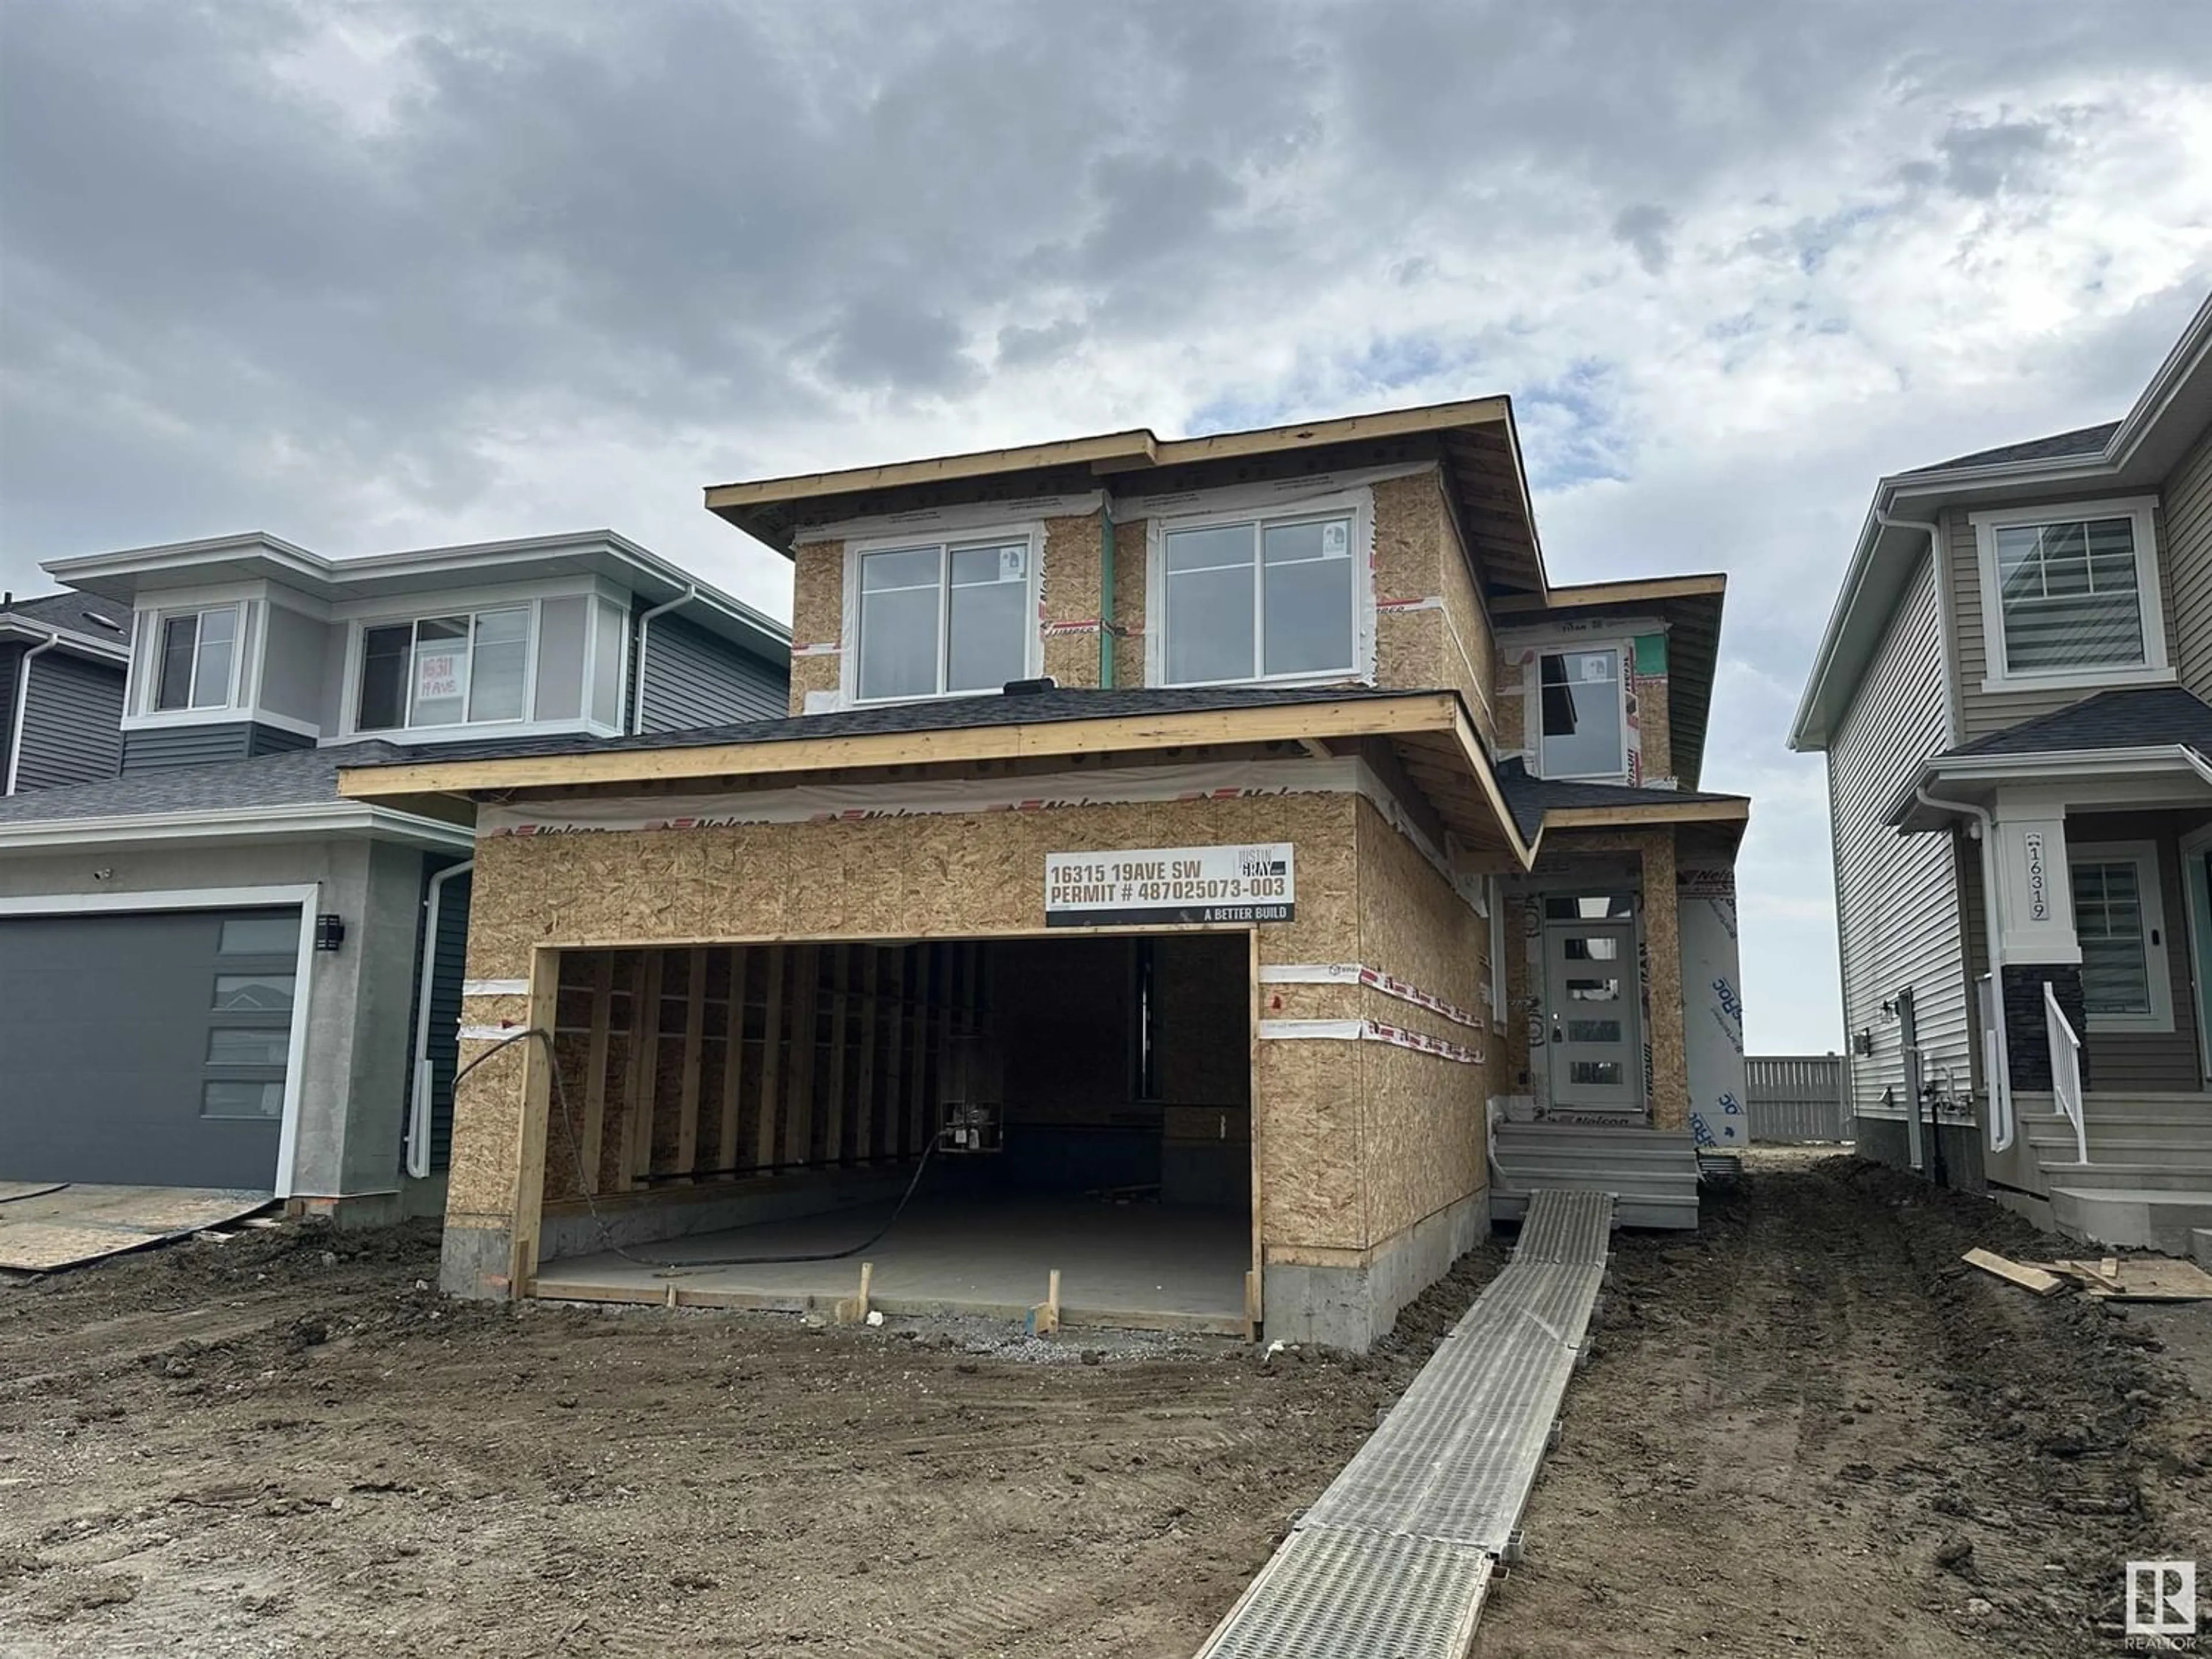 Home with brick exterior material for 16315 19 AV SW, Edmonton Alberta T6J1A6